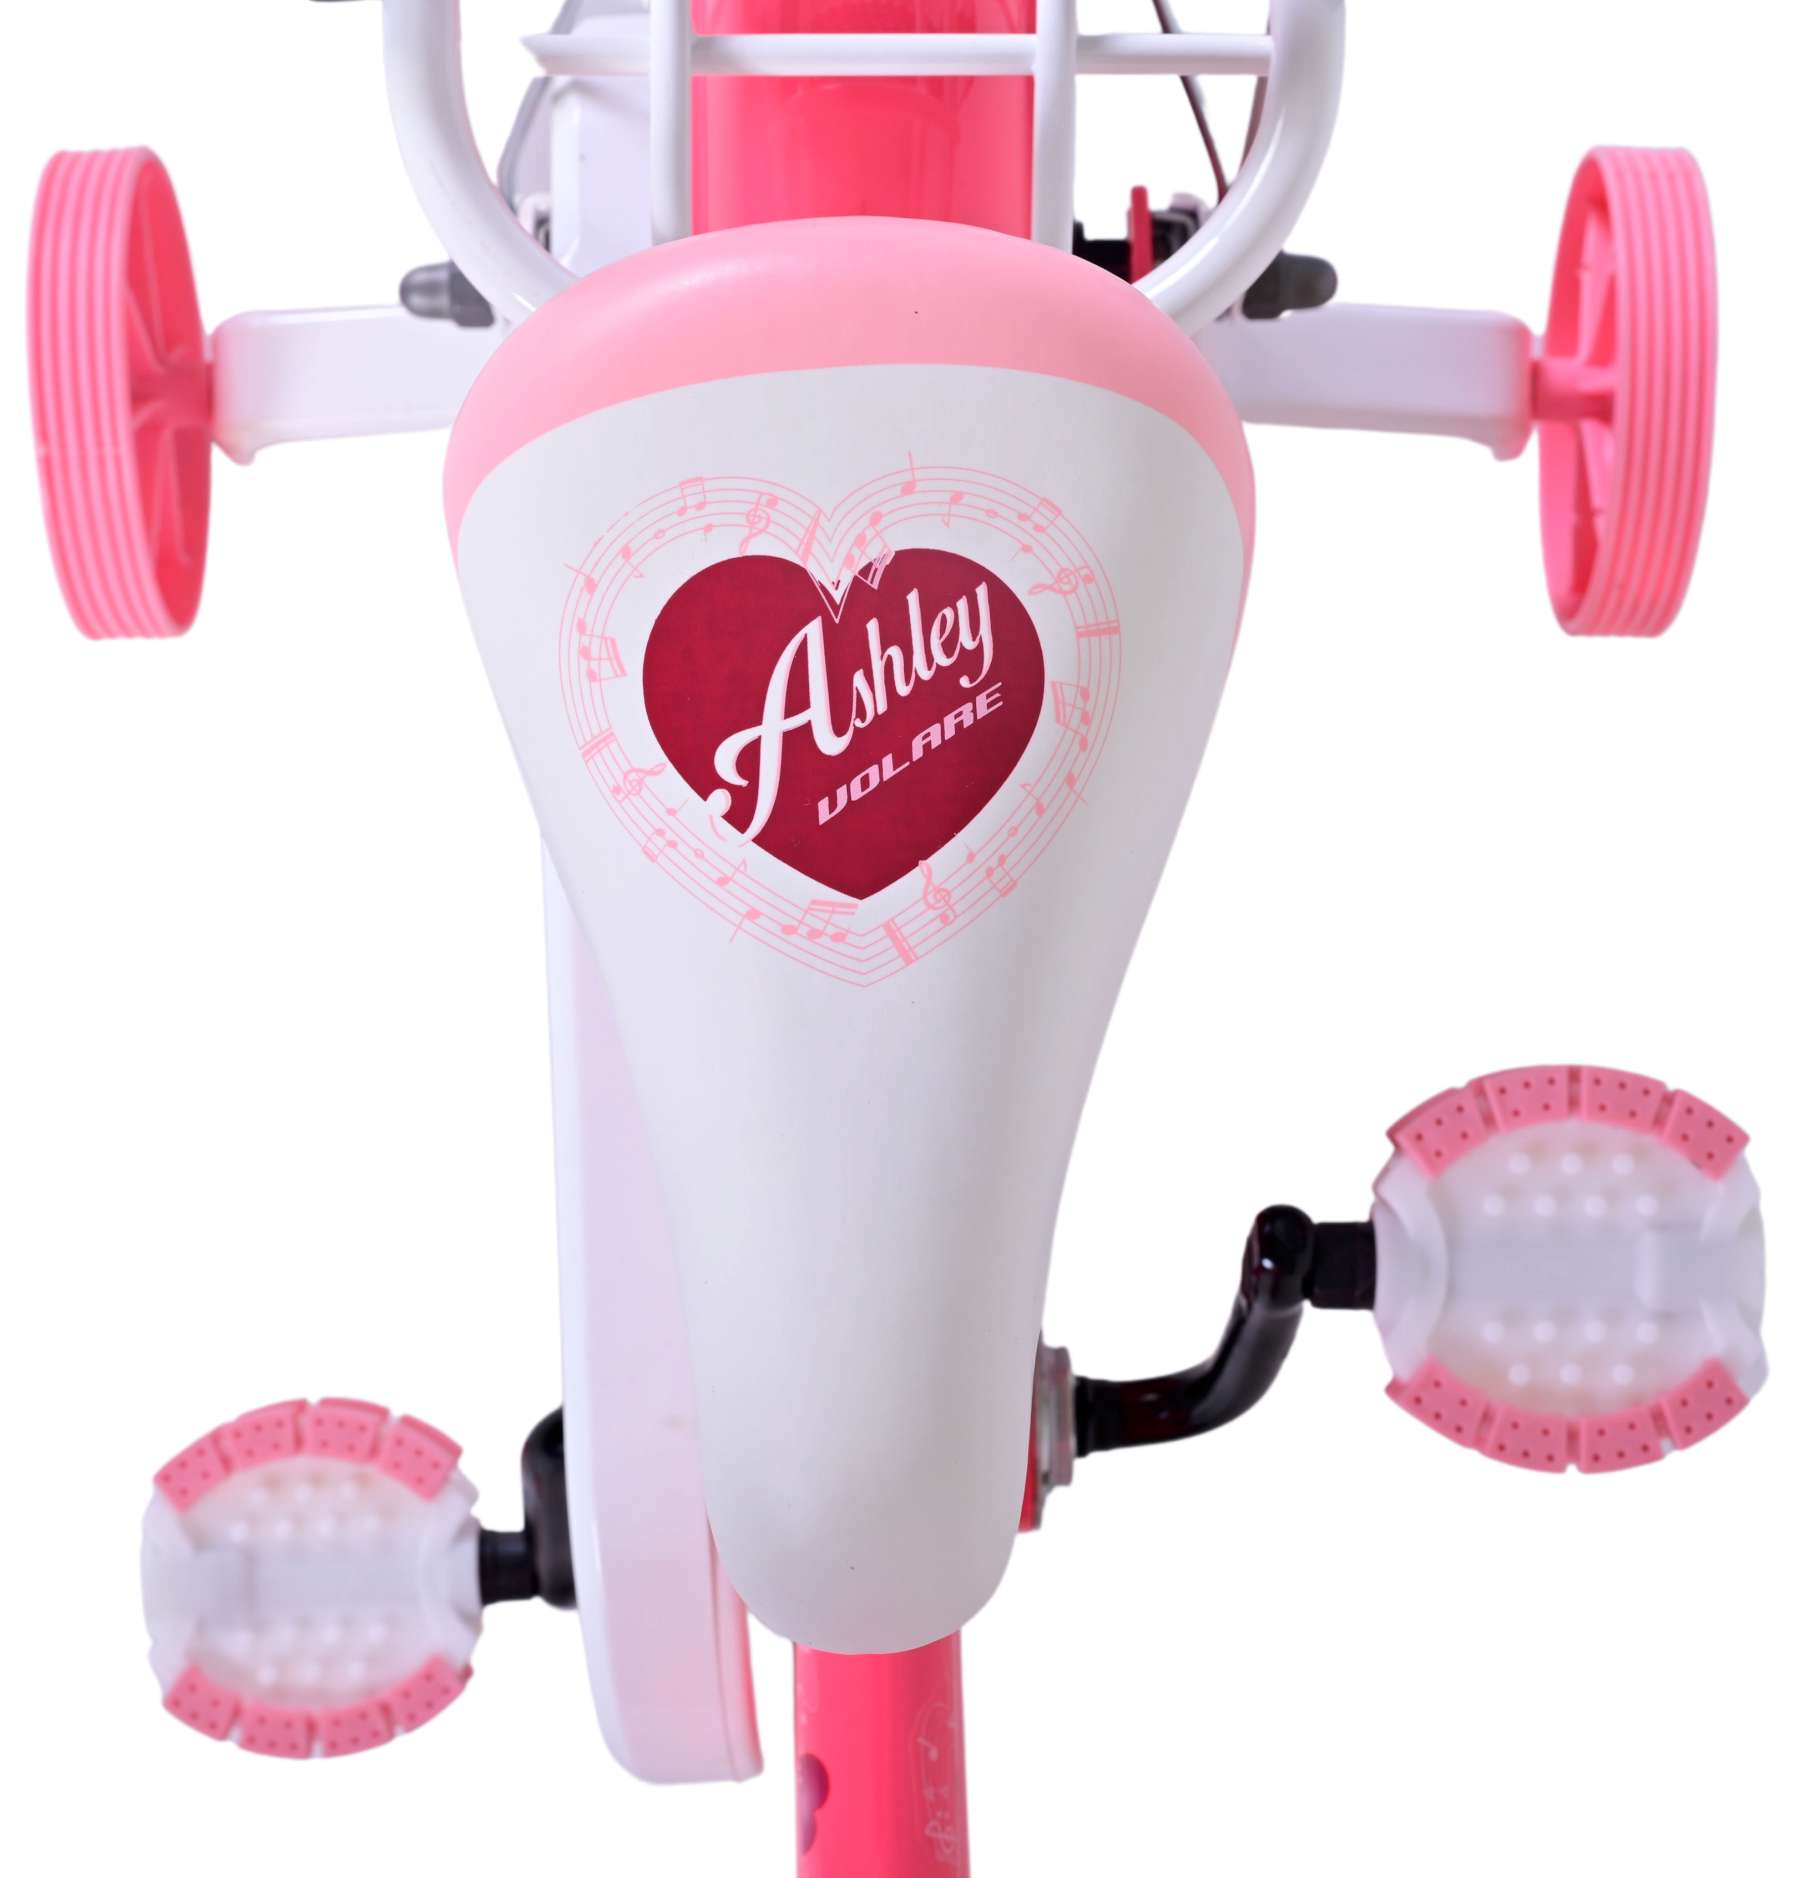 Kinderfahrrad Ashley für Mädchen 12 Zoll Kinderrad in Rot/Rosa